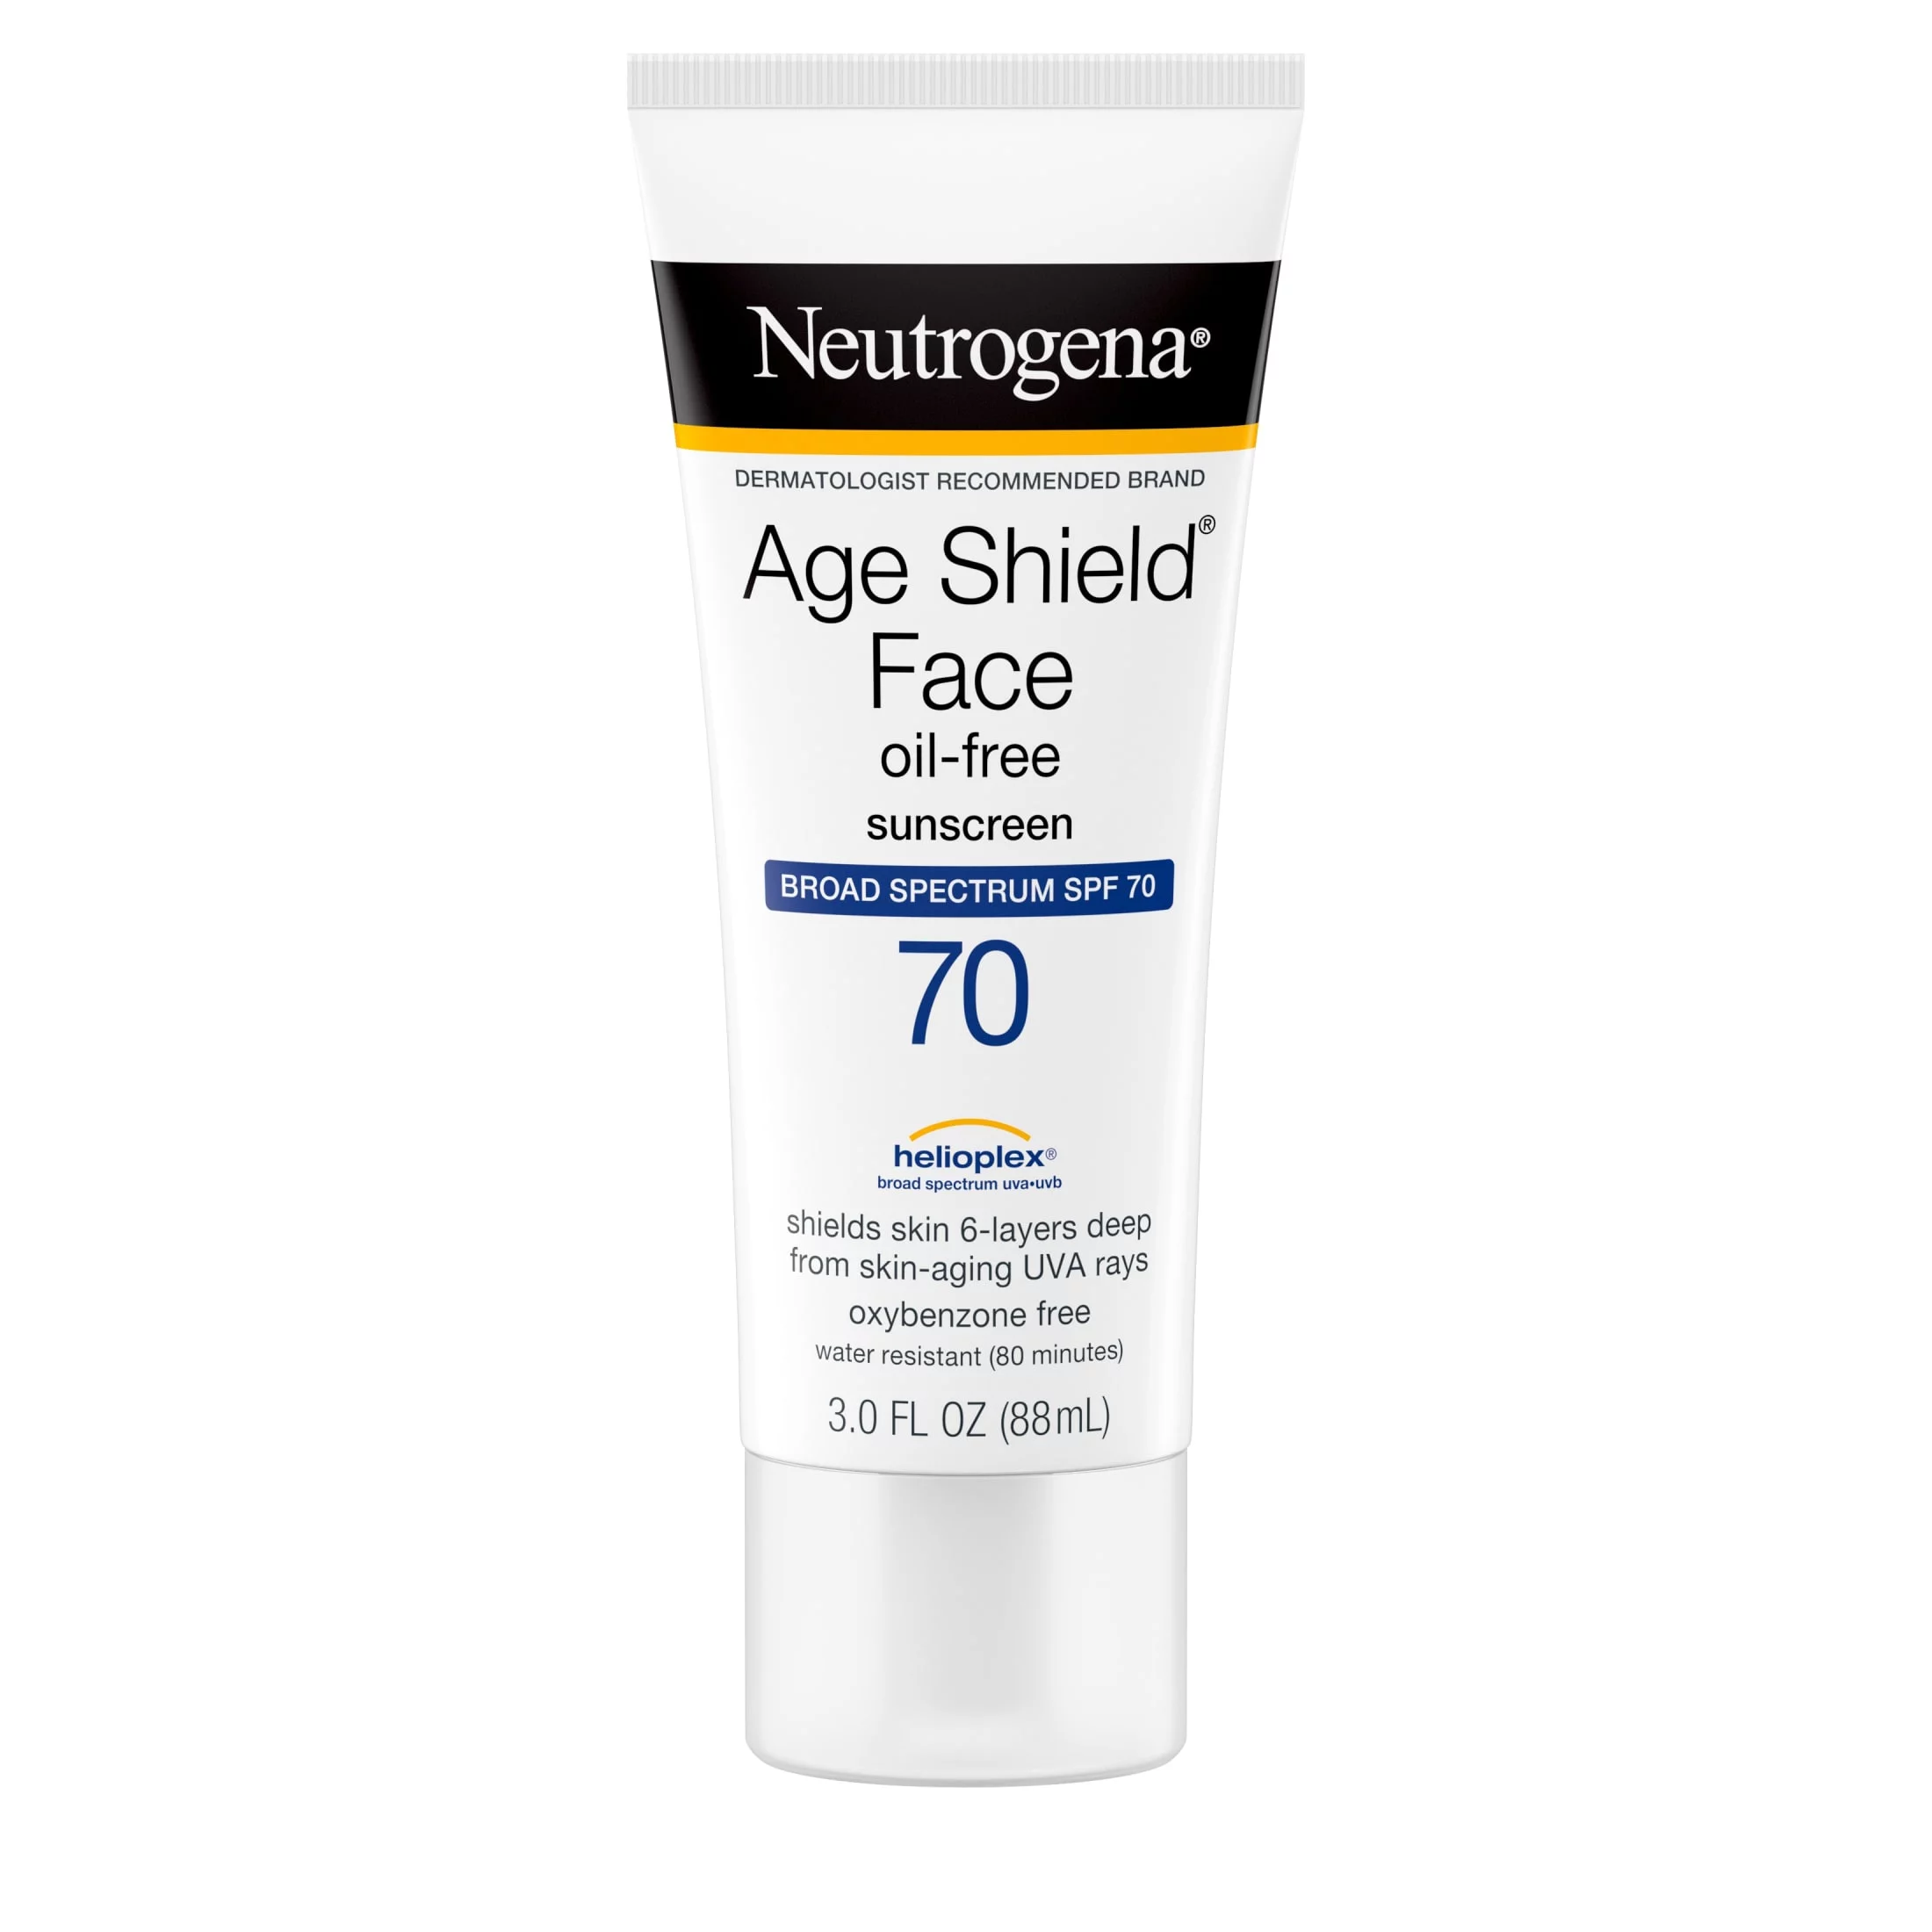 Neutrogena Age Shield Face Oil-Free Sunscreen, SPF 70 Sunblock, 3 fl oz